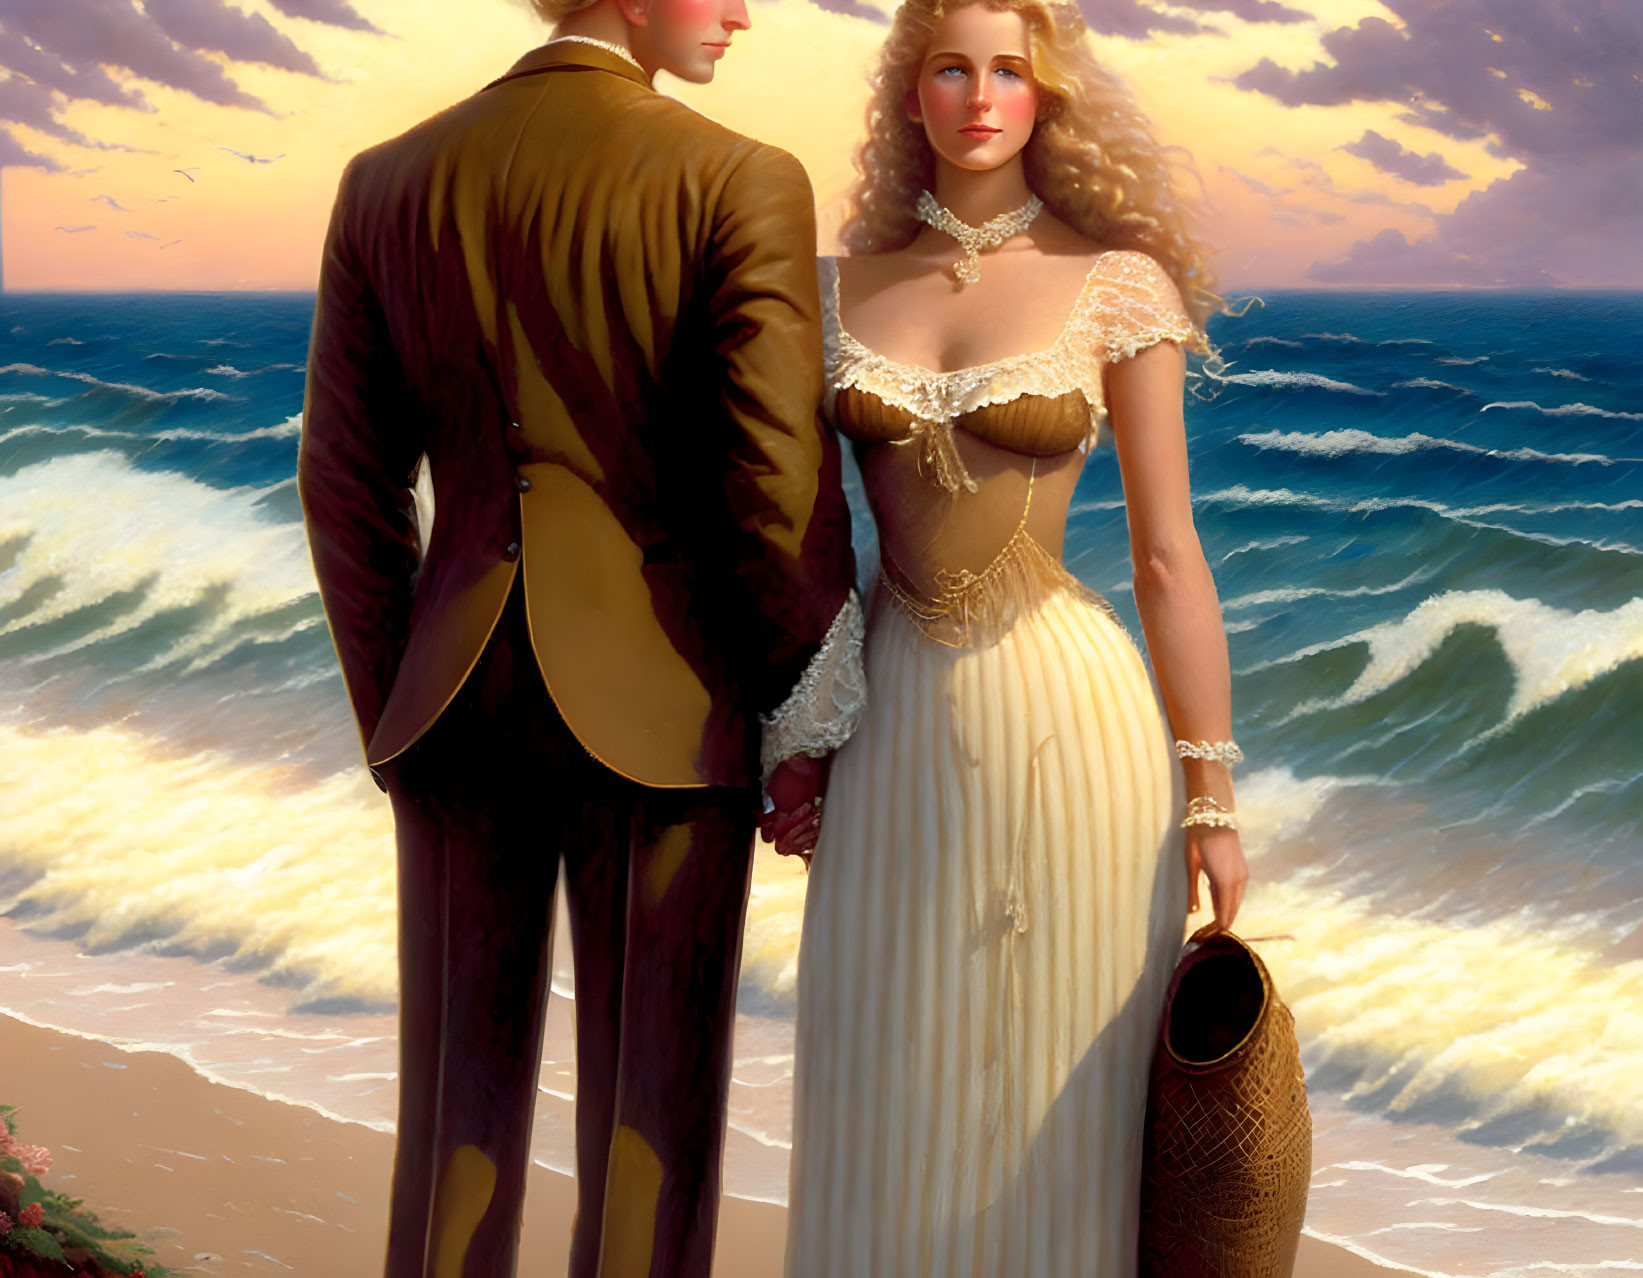 Romance by the sea